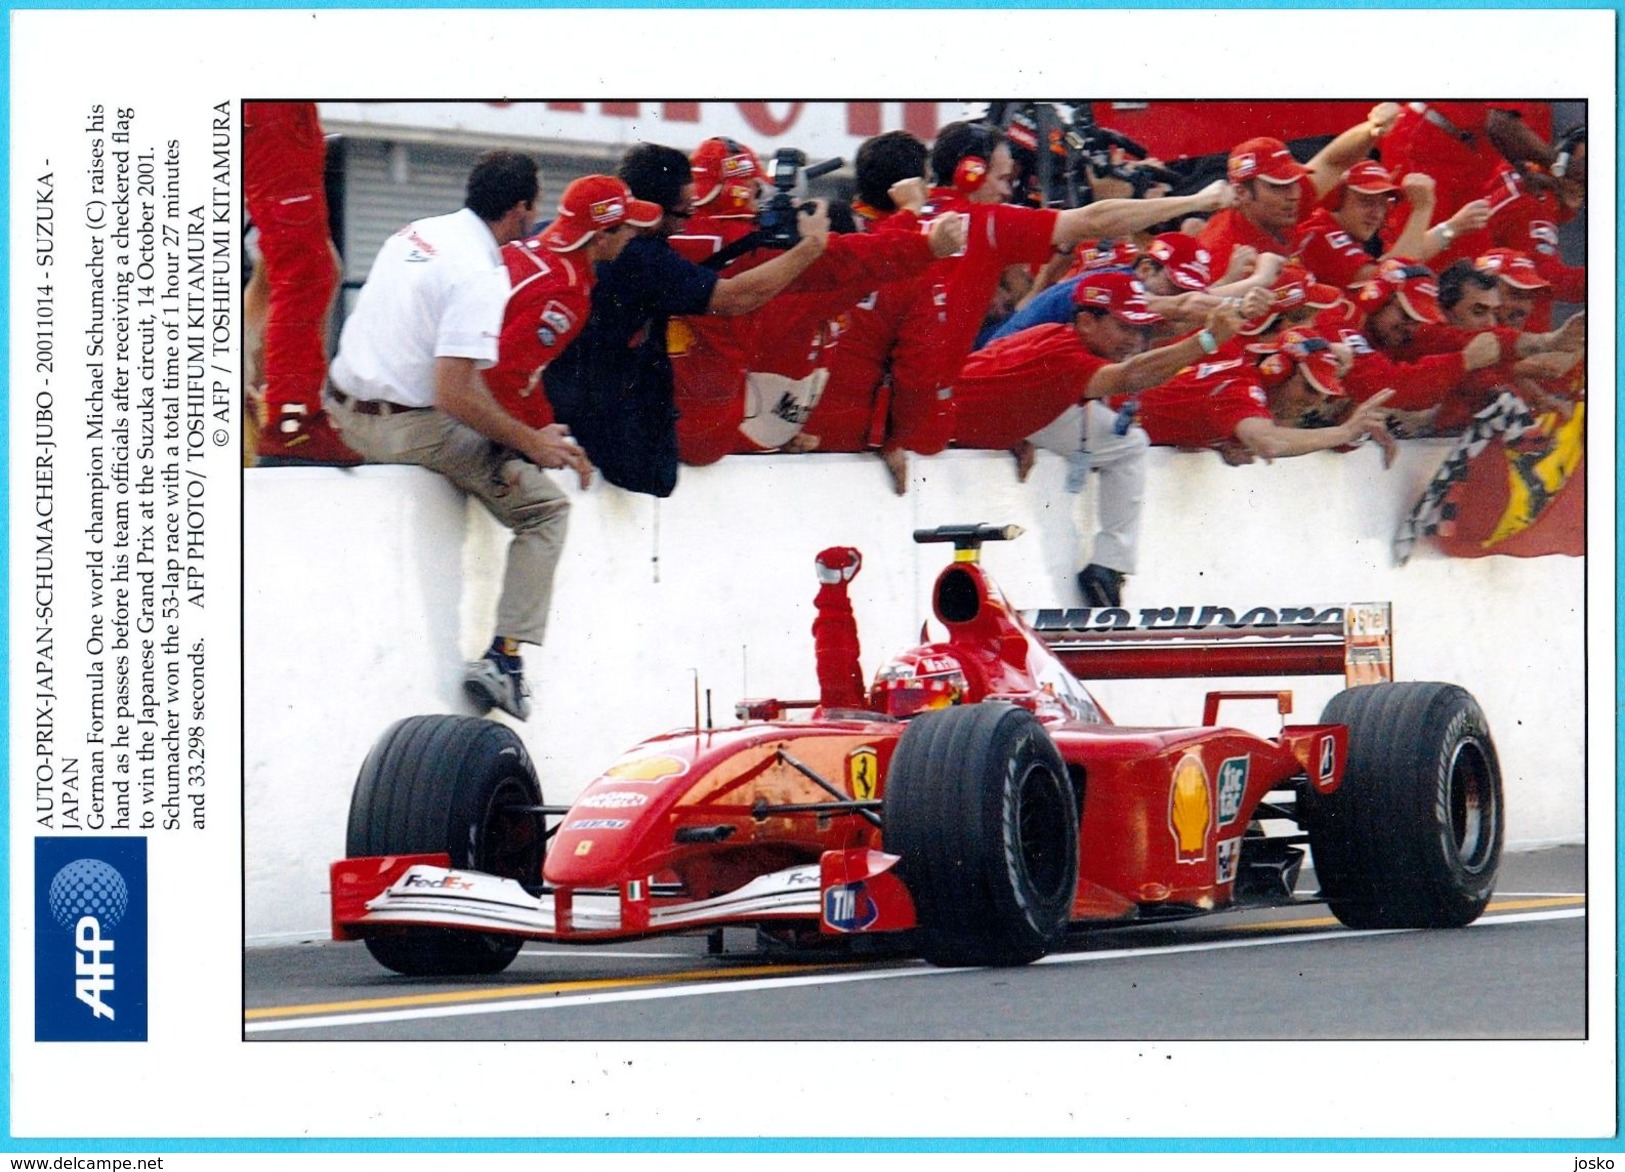 MICHAEL SCHUMACHER - Japan Grand Prix Suzuka 2001.*** BEAUTIFULL LARGE PHOTO *** Ferrari F1 Formula 1 Car Automobile - Autosport - F1